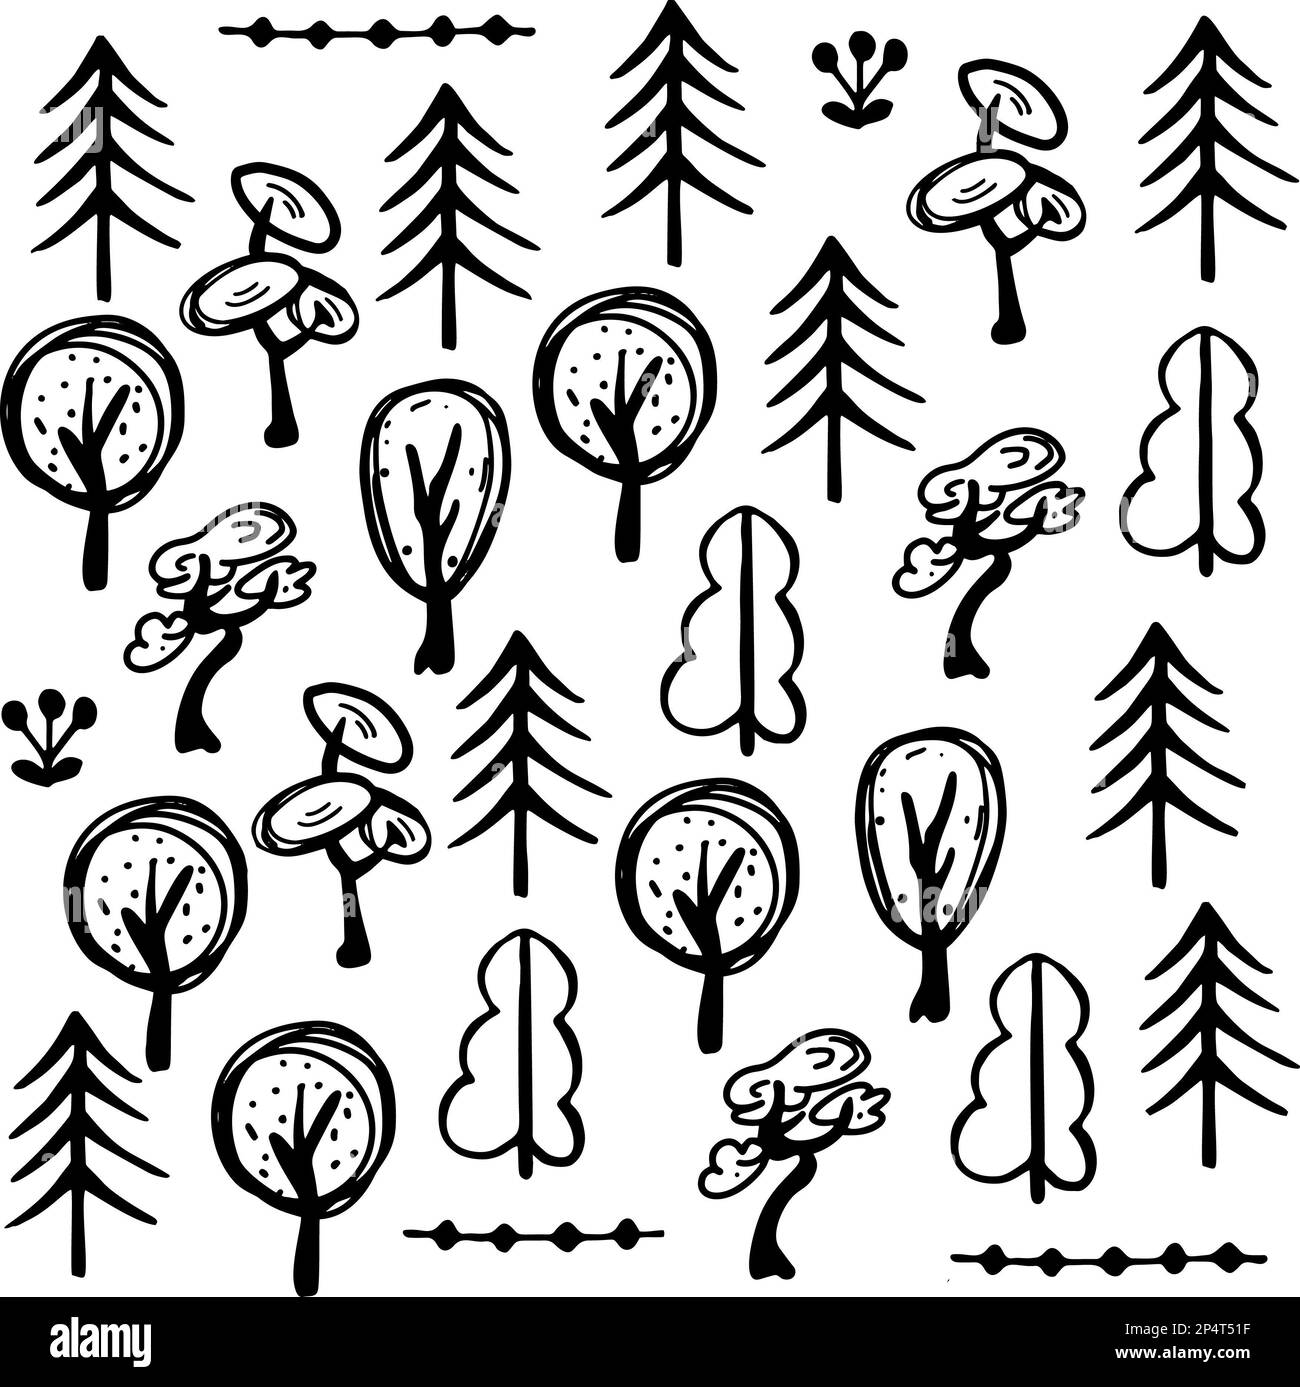 Trees pattern sketch, Stock Photo